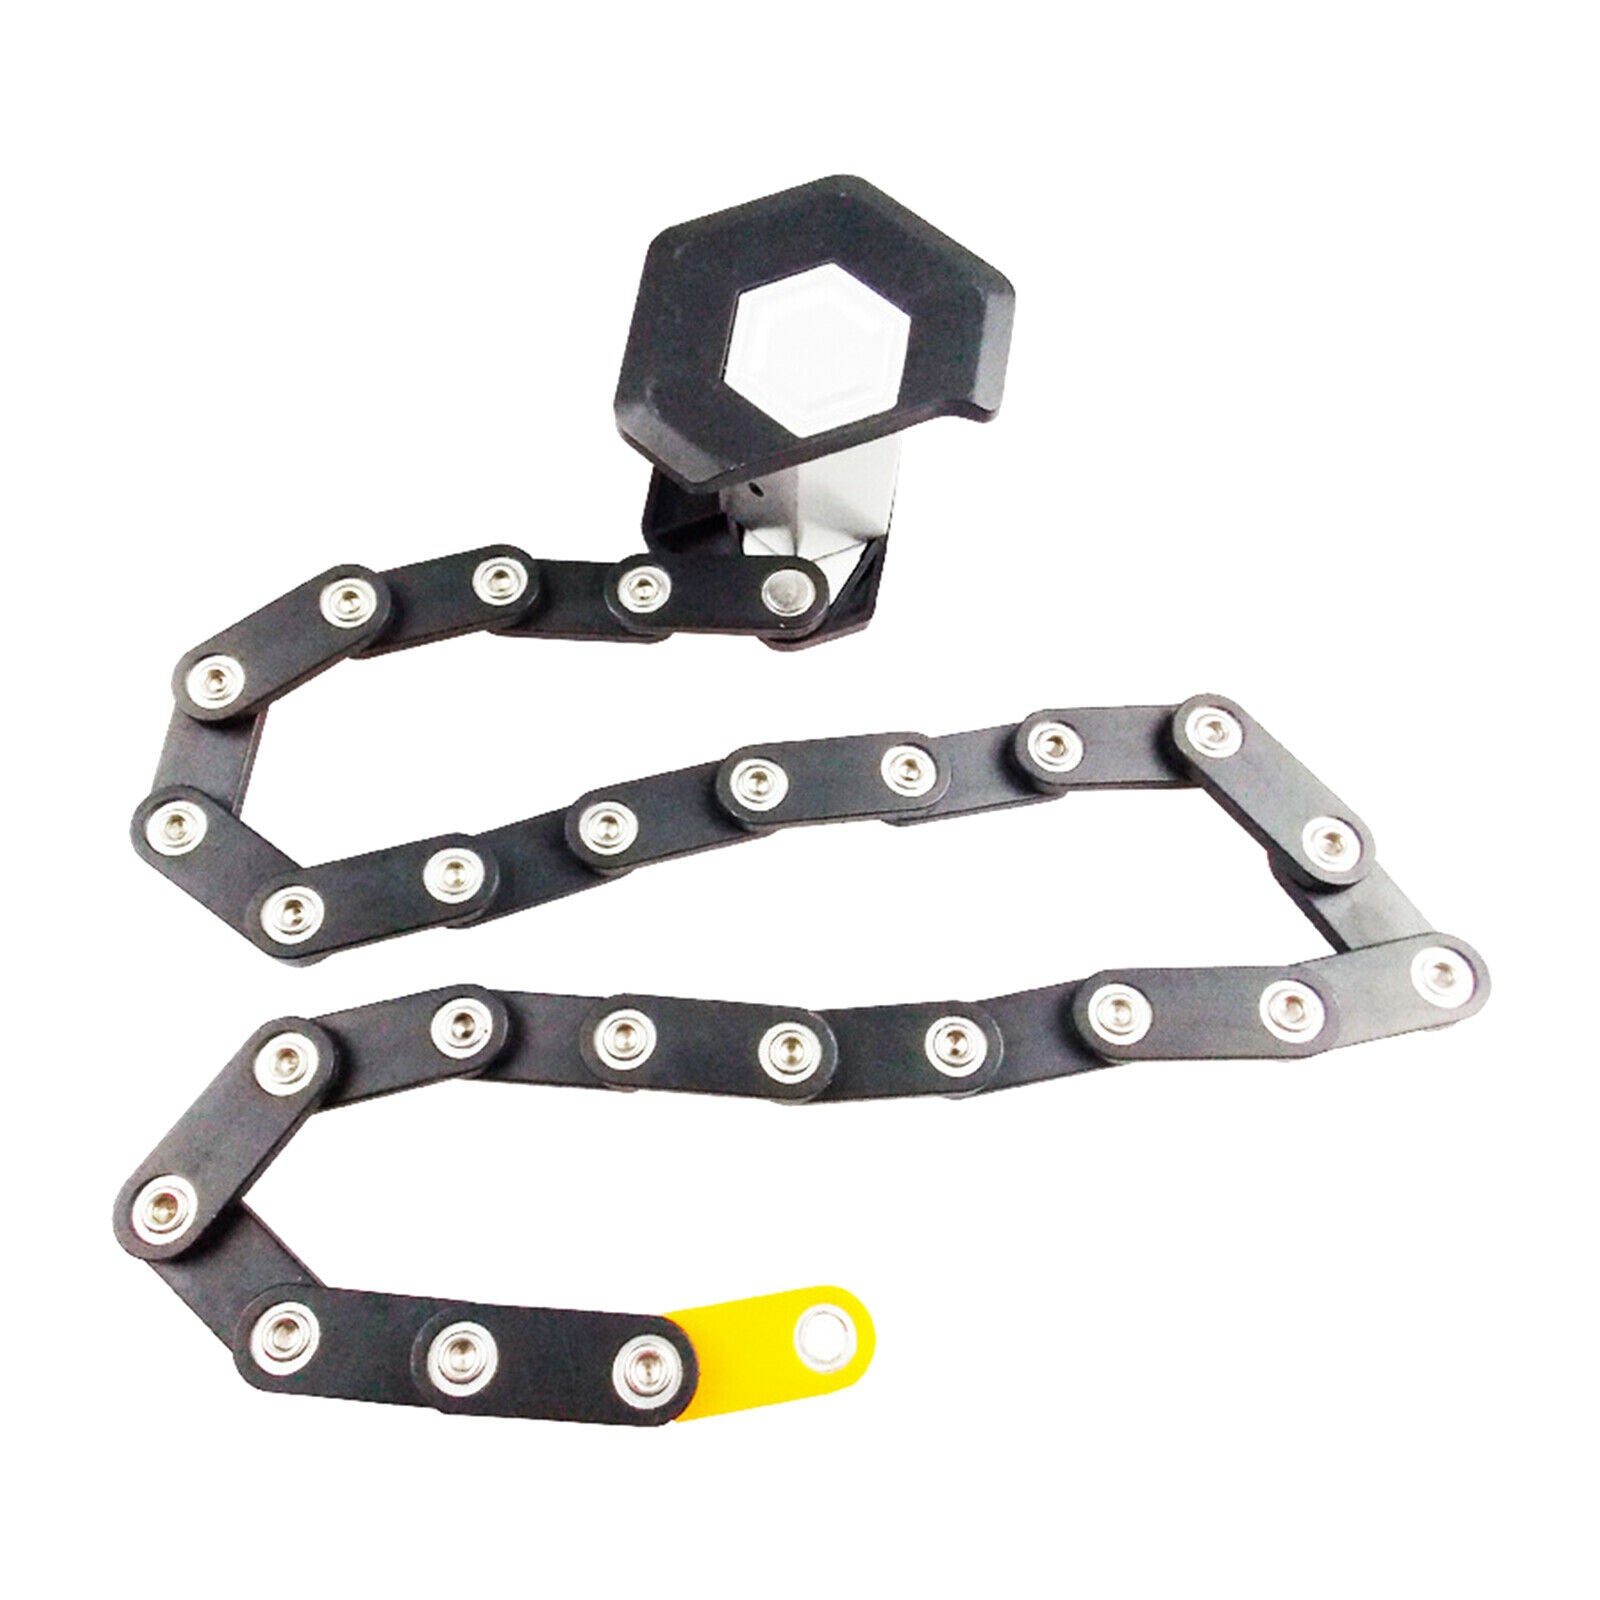 Bike Chain Lock Folding Lock with Key, Strap,Holder Anti-theft Easy Mounting